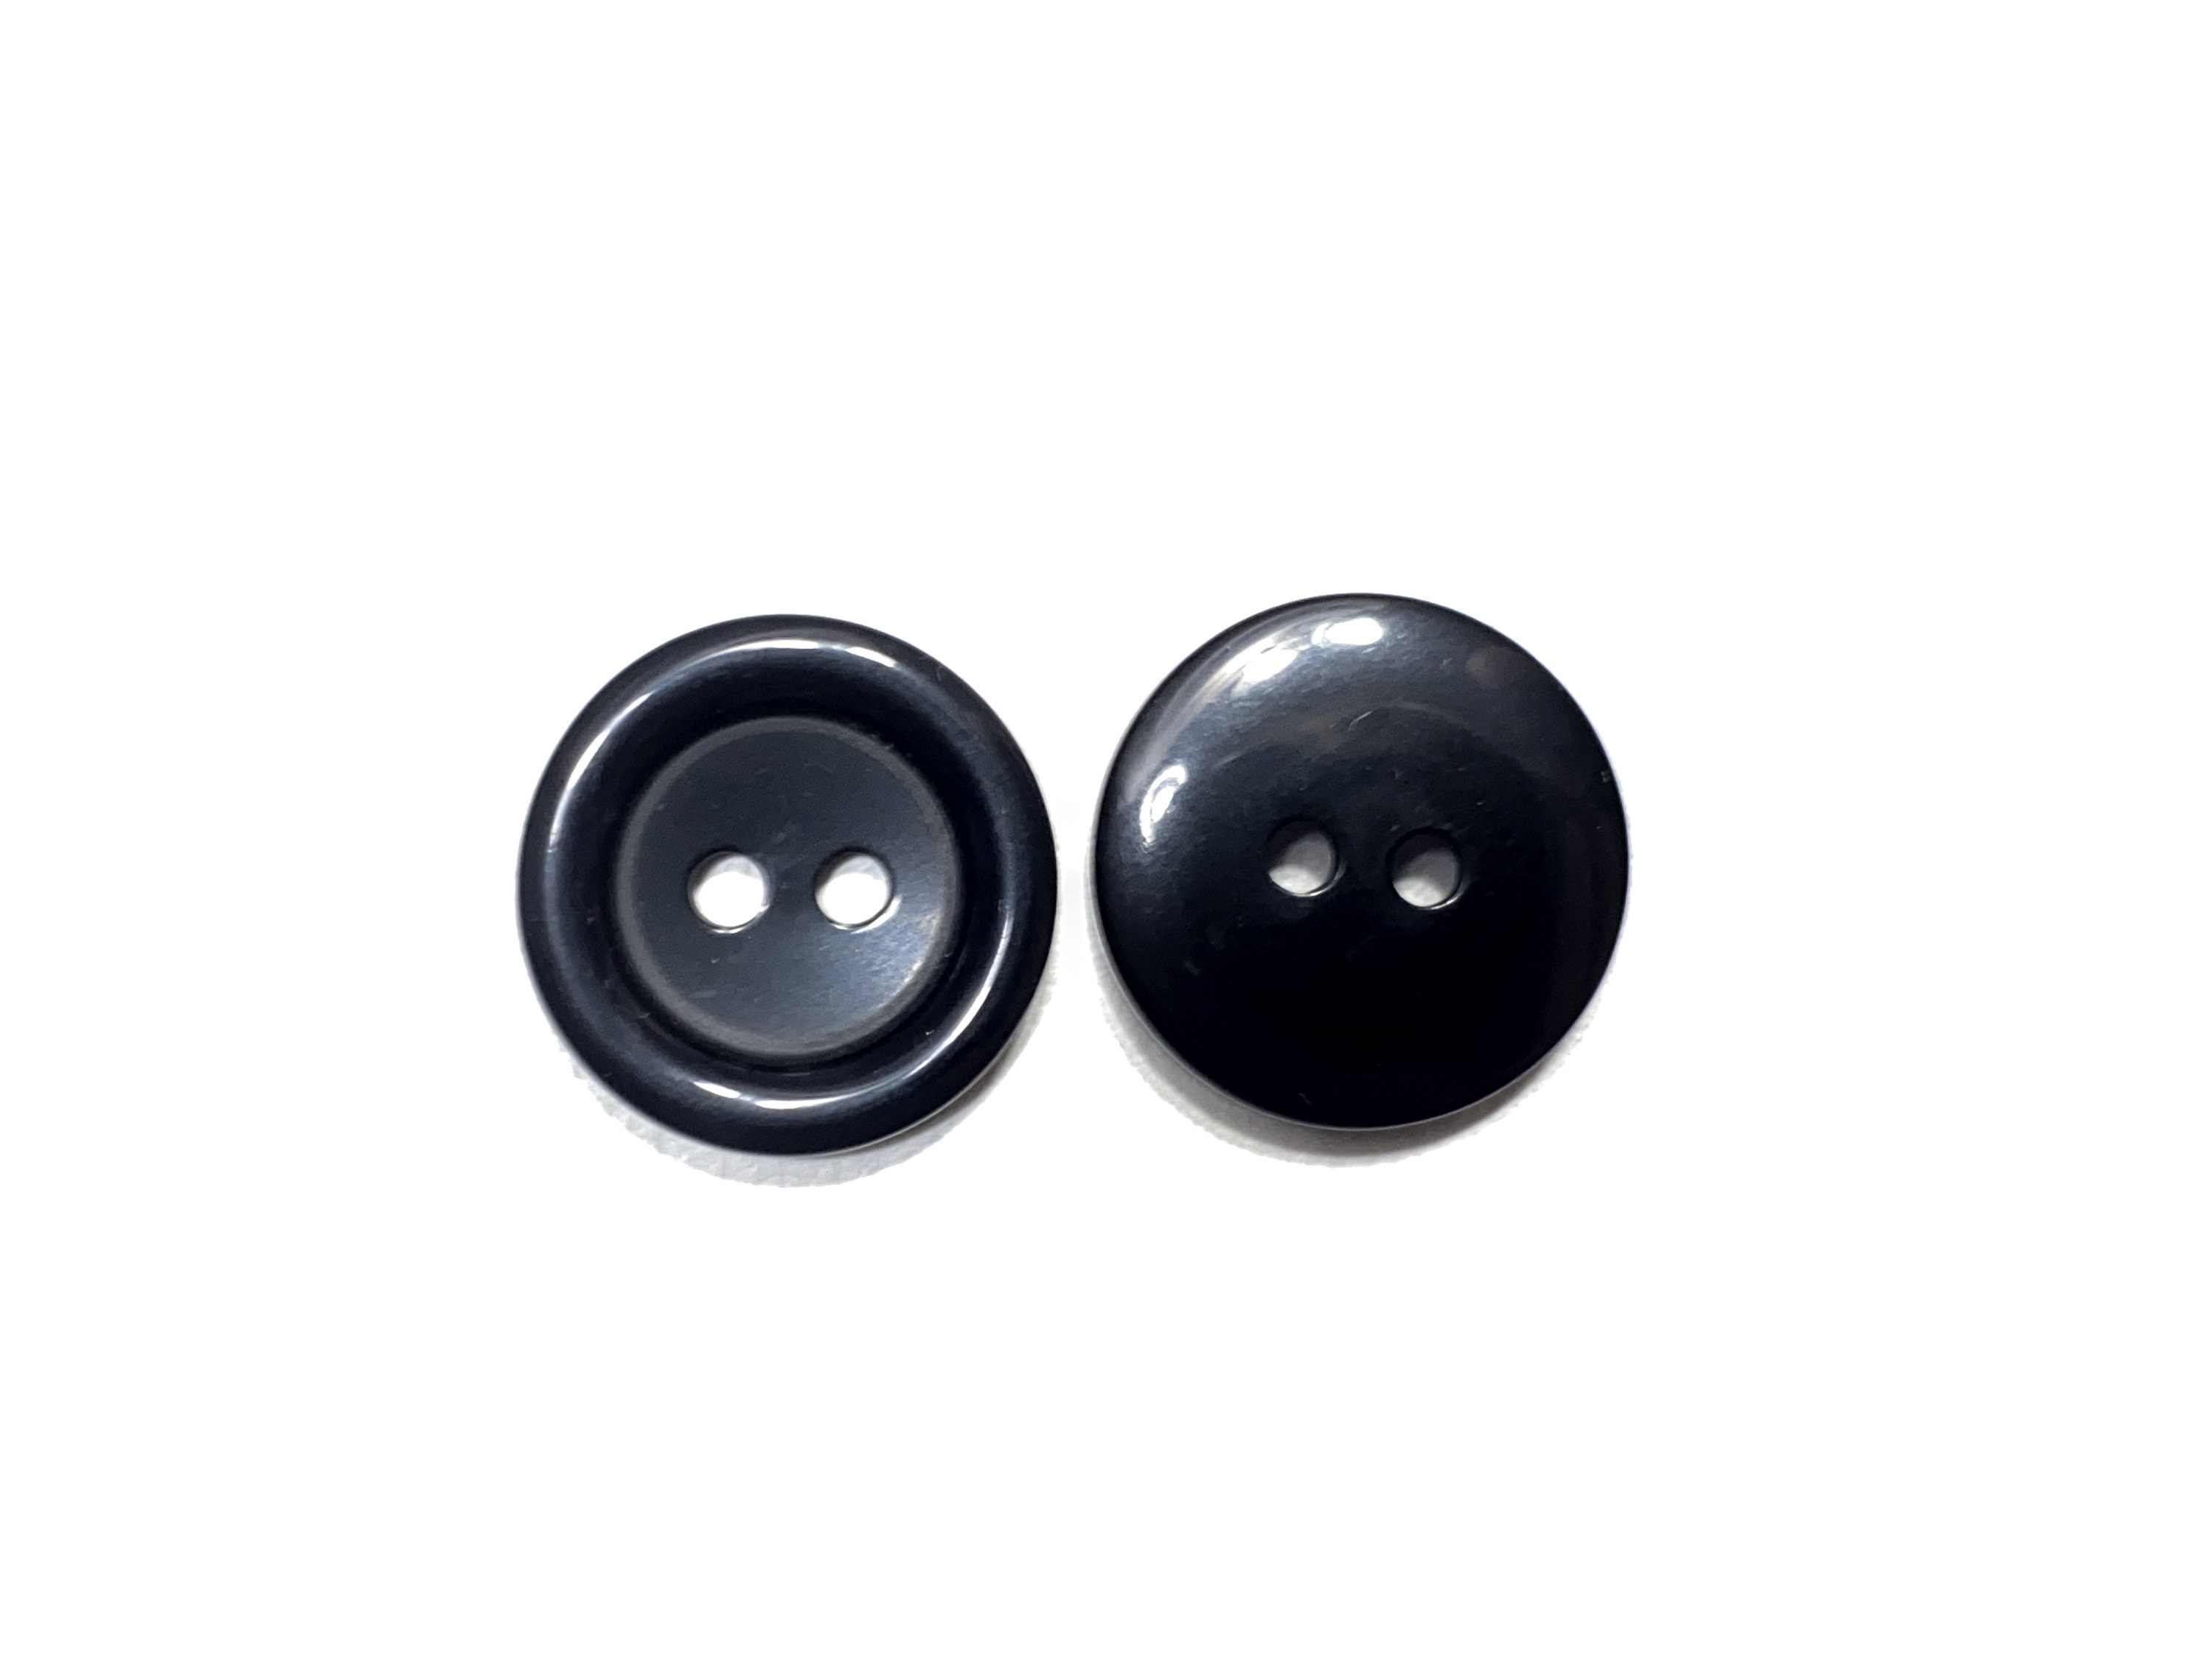 Italian 2 Hole Large Black Button 1-3/8 (34mm) 54L Big Buttons #765